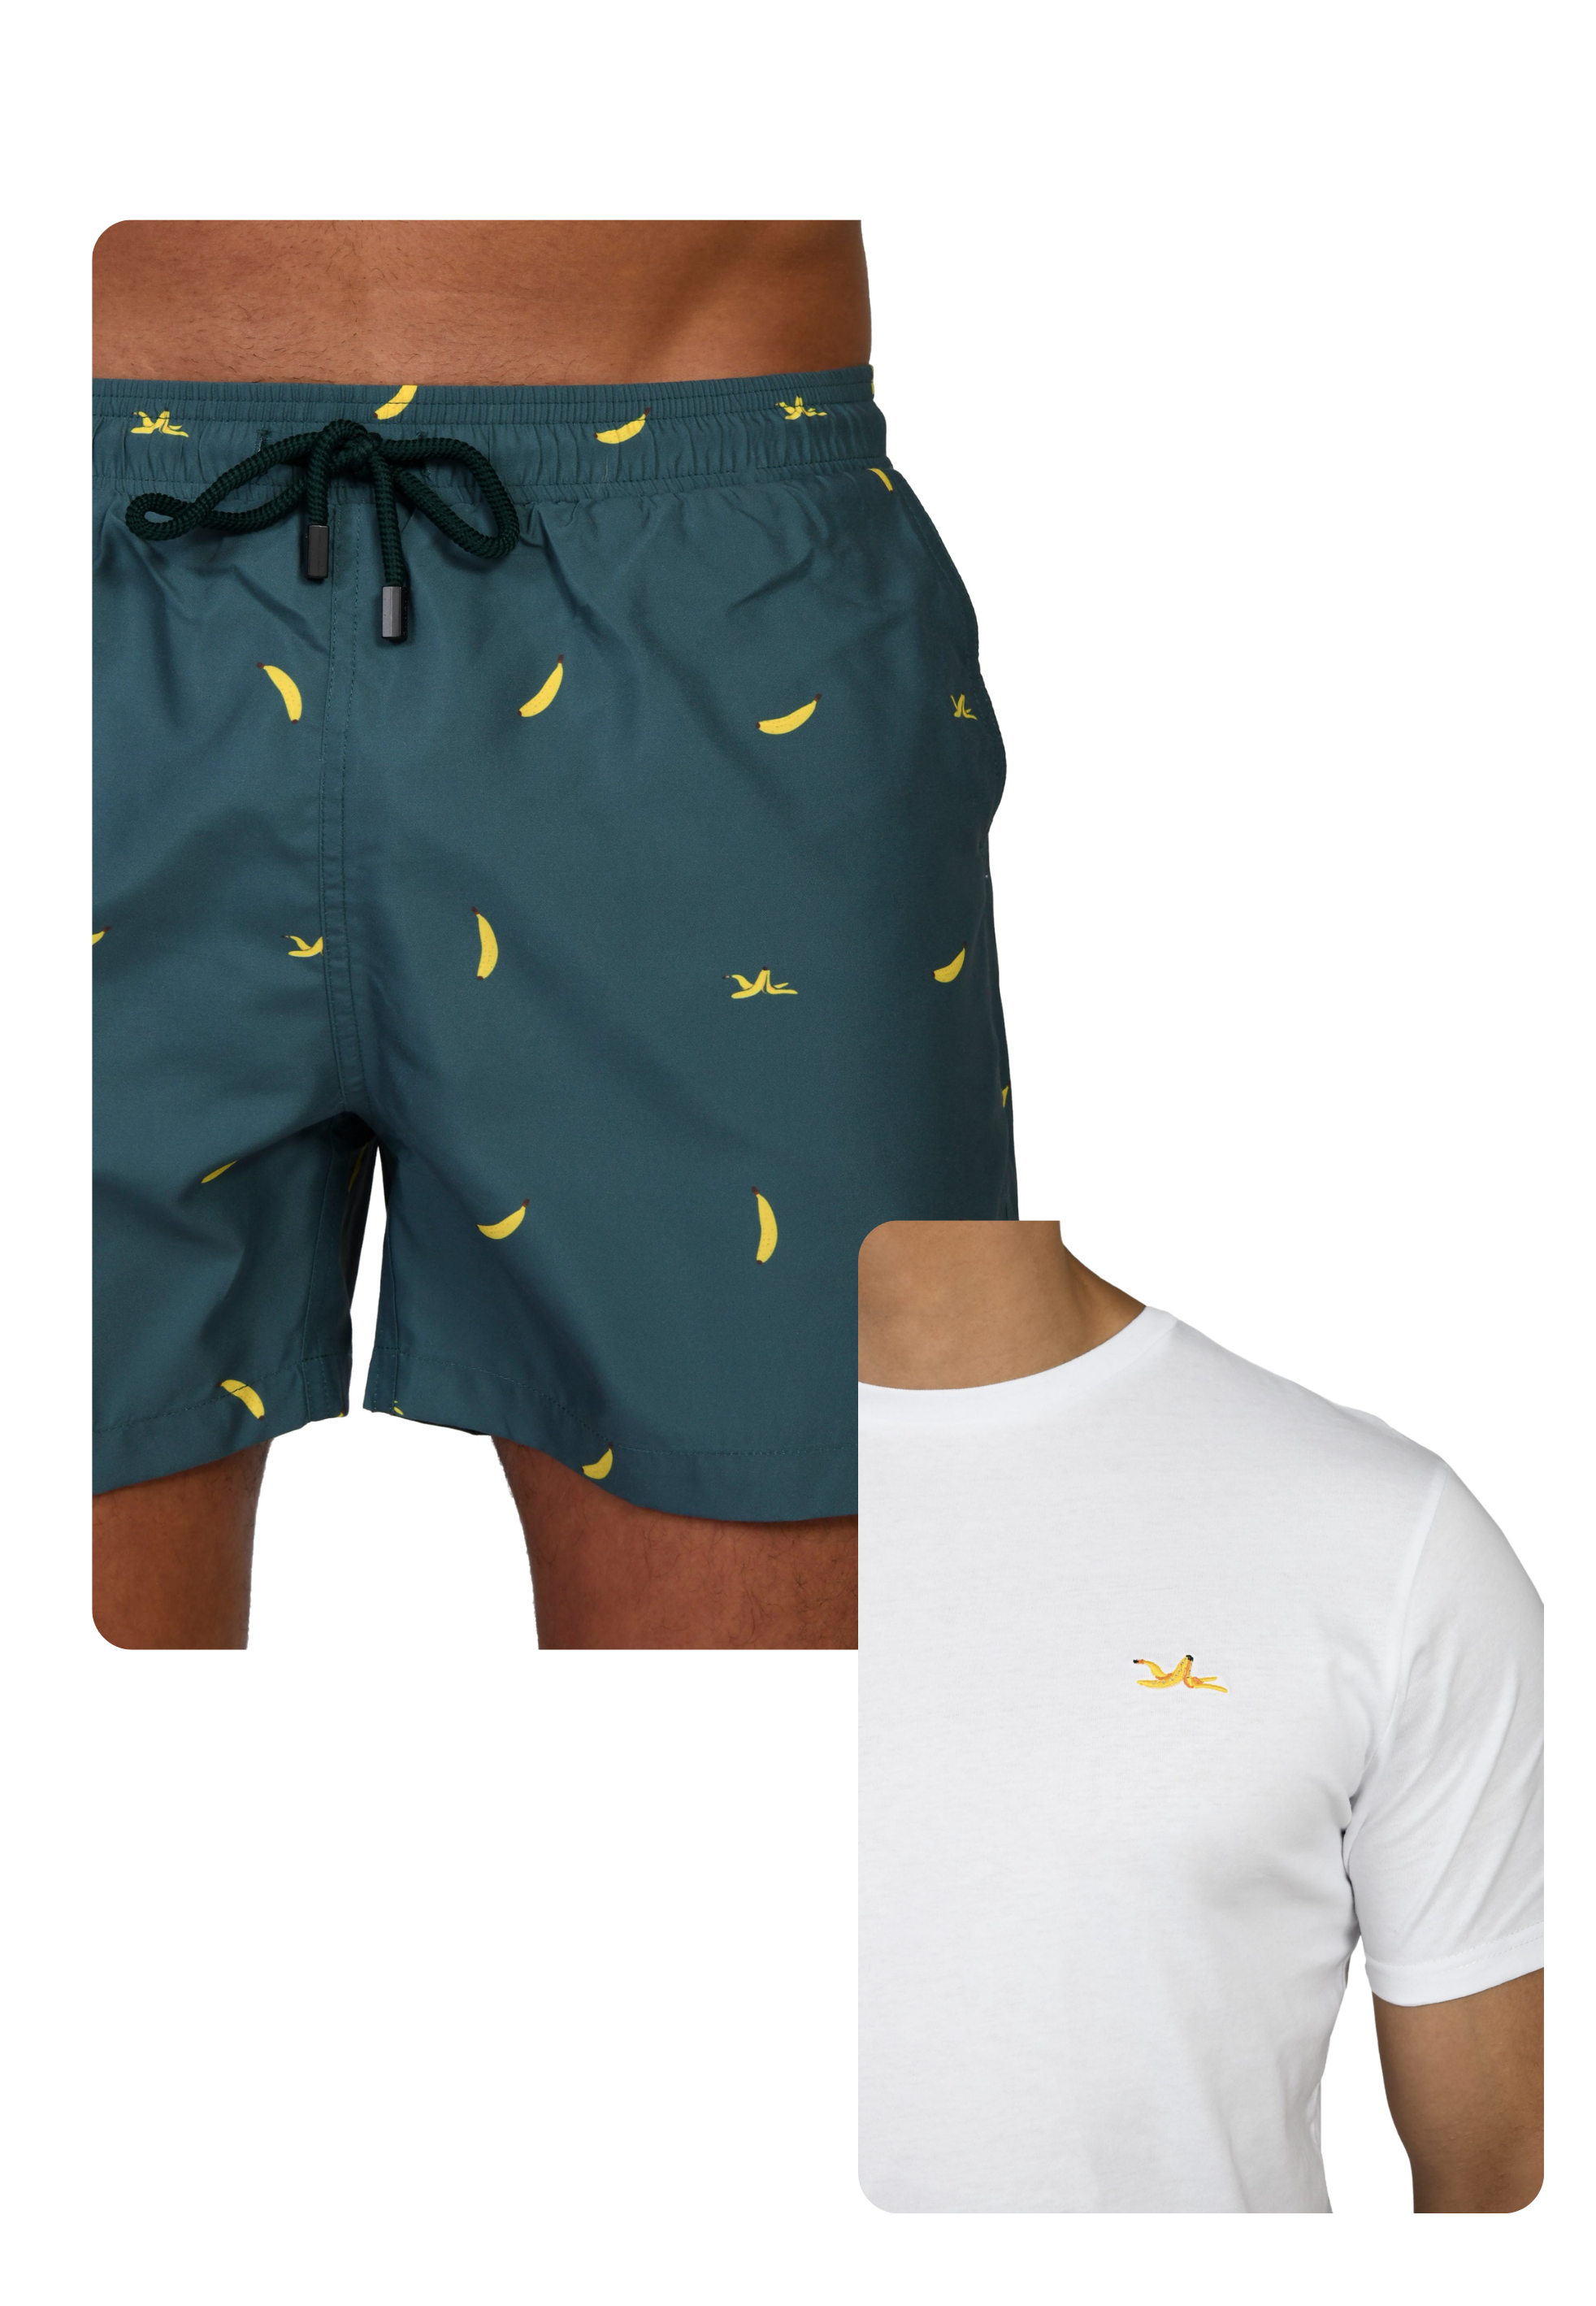 Banana Swim Trunks and T-shirt Bundle